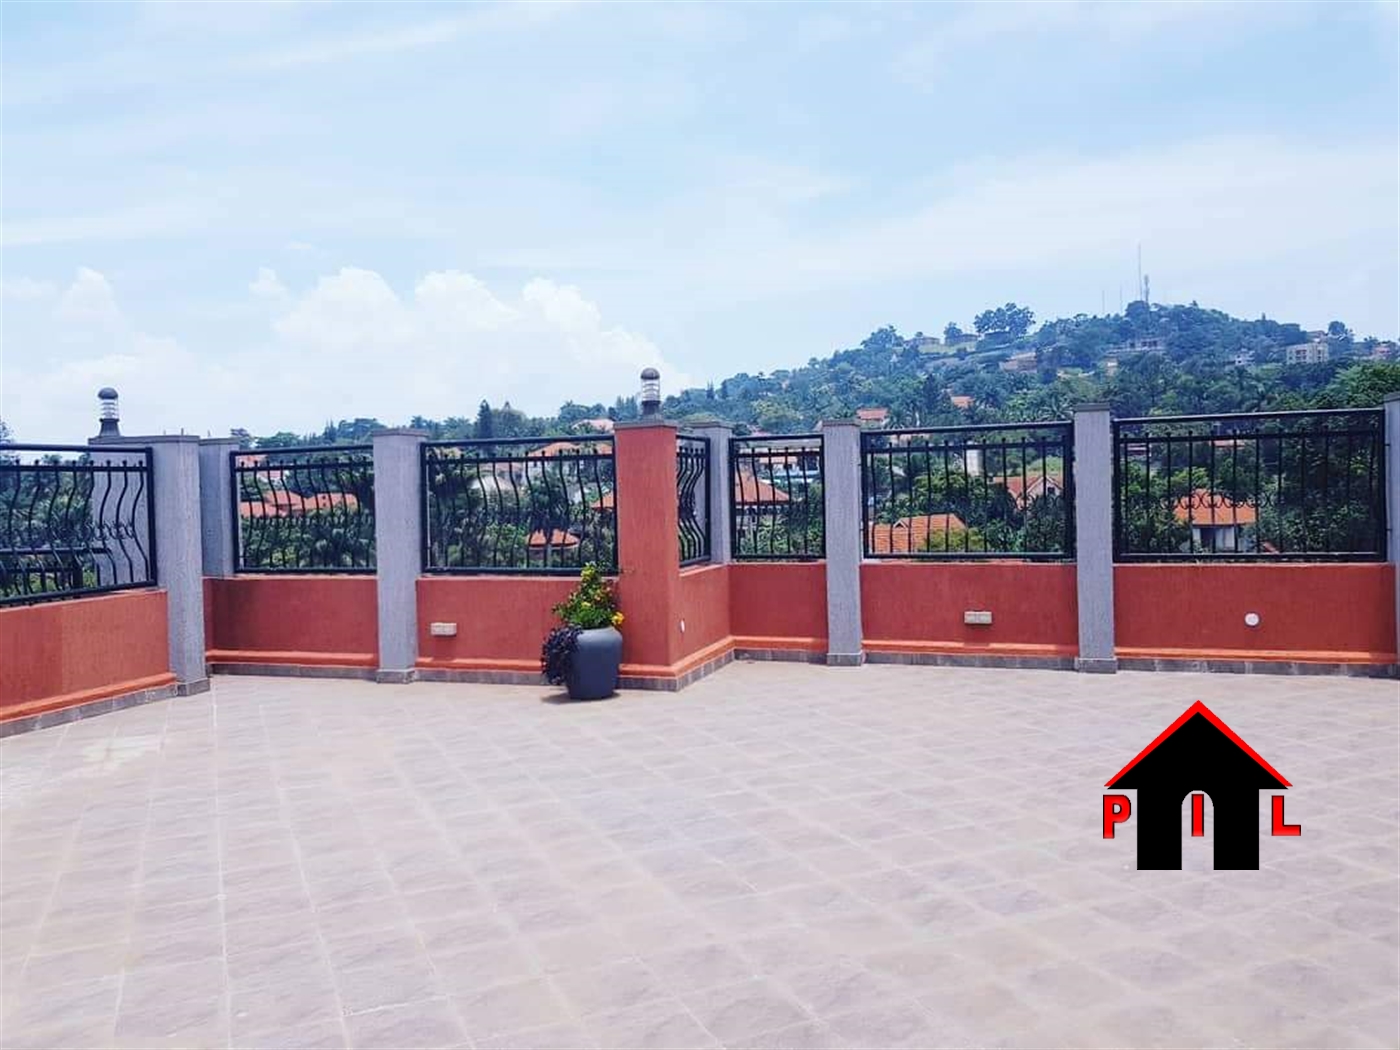 Apartment block for sale in Mengo Kampala